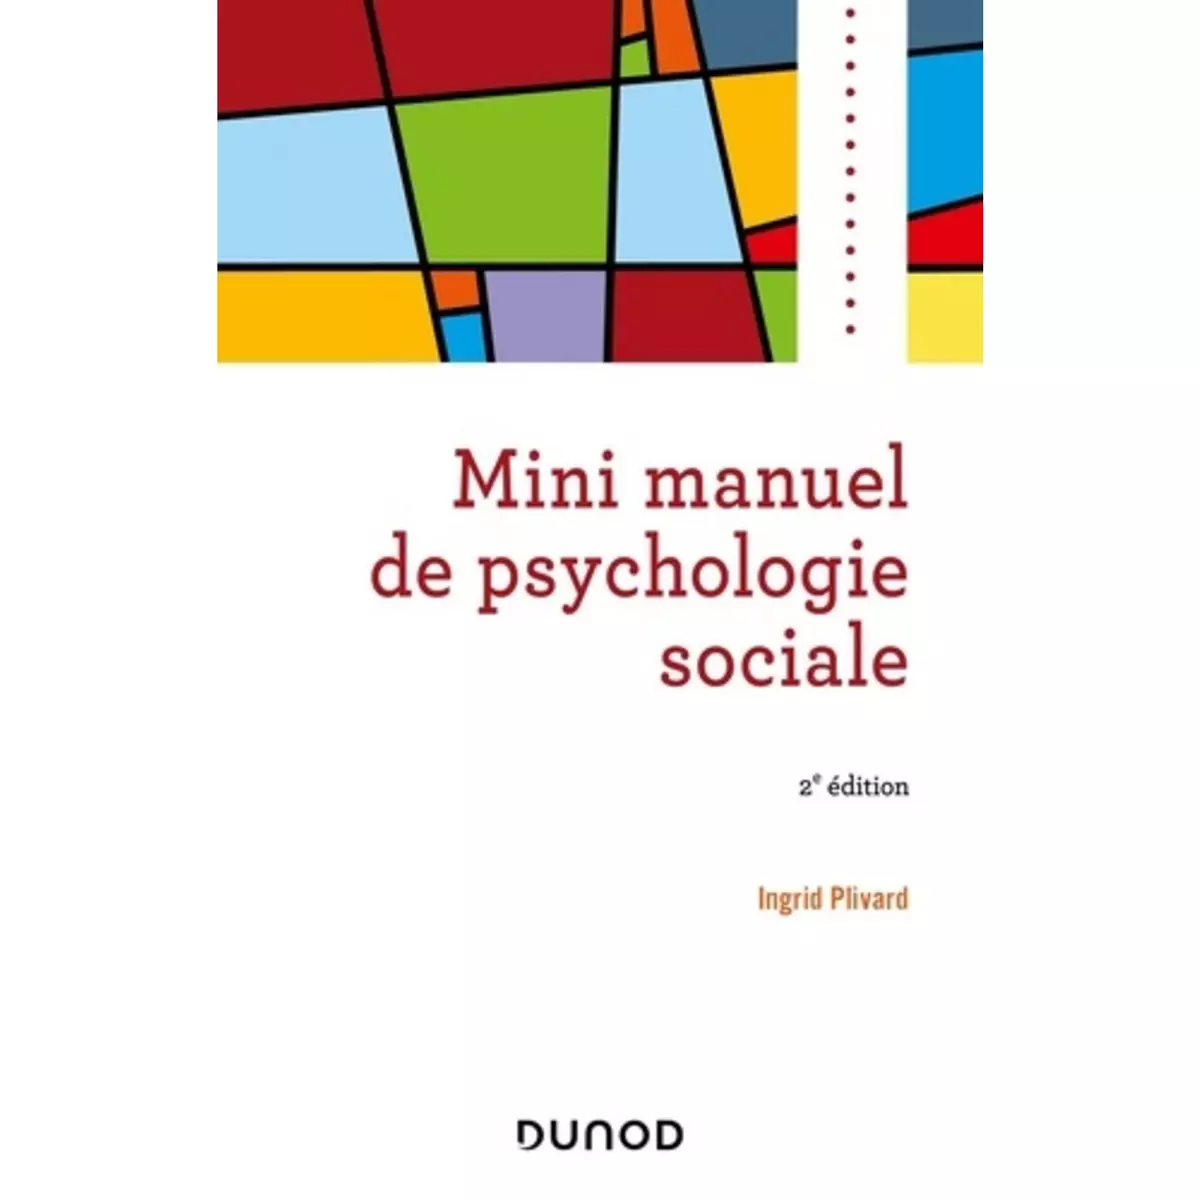  MINI MANUEL DE PSYCHOLOGIE SOCIALE. 2E EDITION, Plivard Ingrid